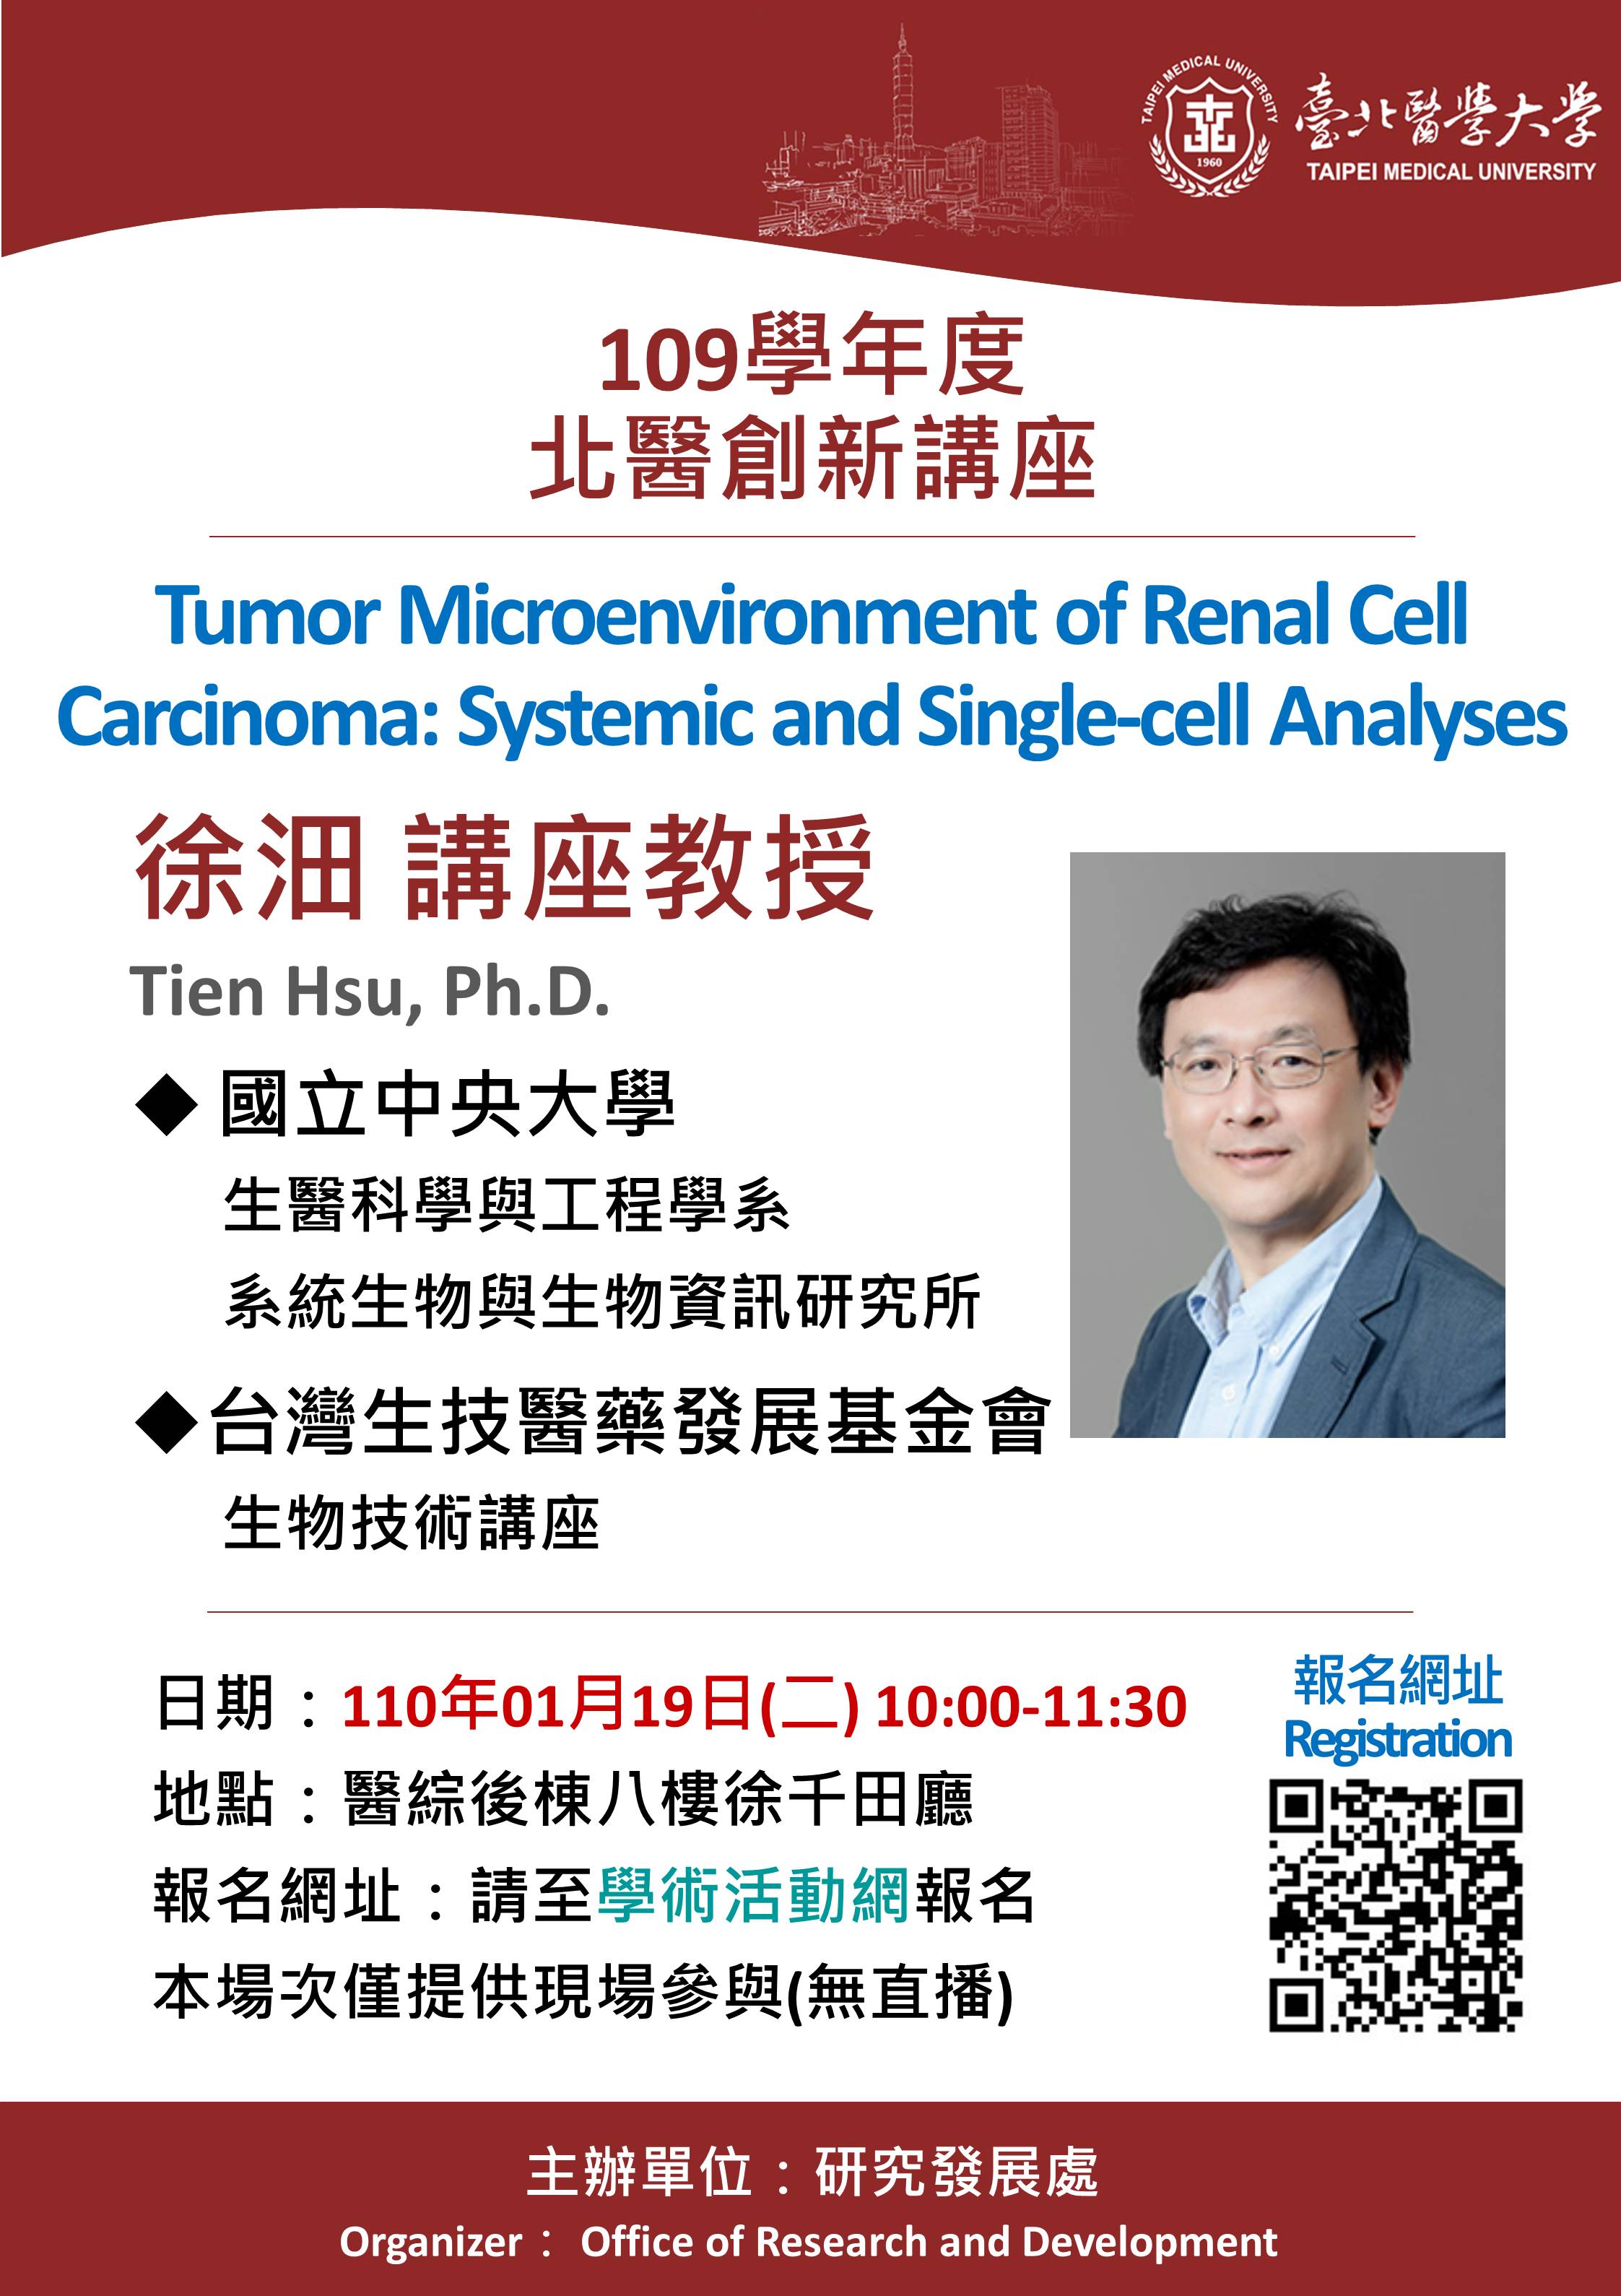 109學年度「北醫創新講座」-110/01/19(二)-中央大學徐沺講座教授-「Tumor Microenvironment of Renal Cell Carcinoma: Systemic and Single-cell Analyses」